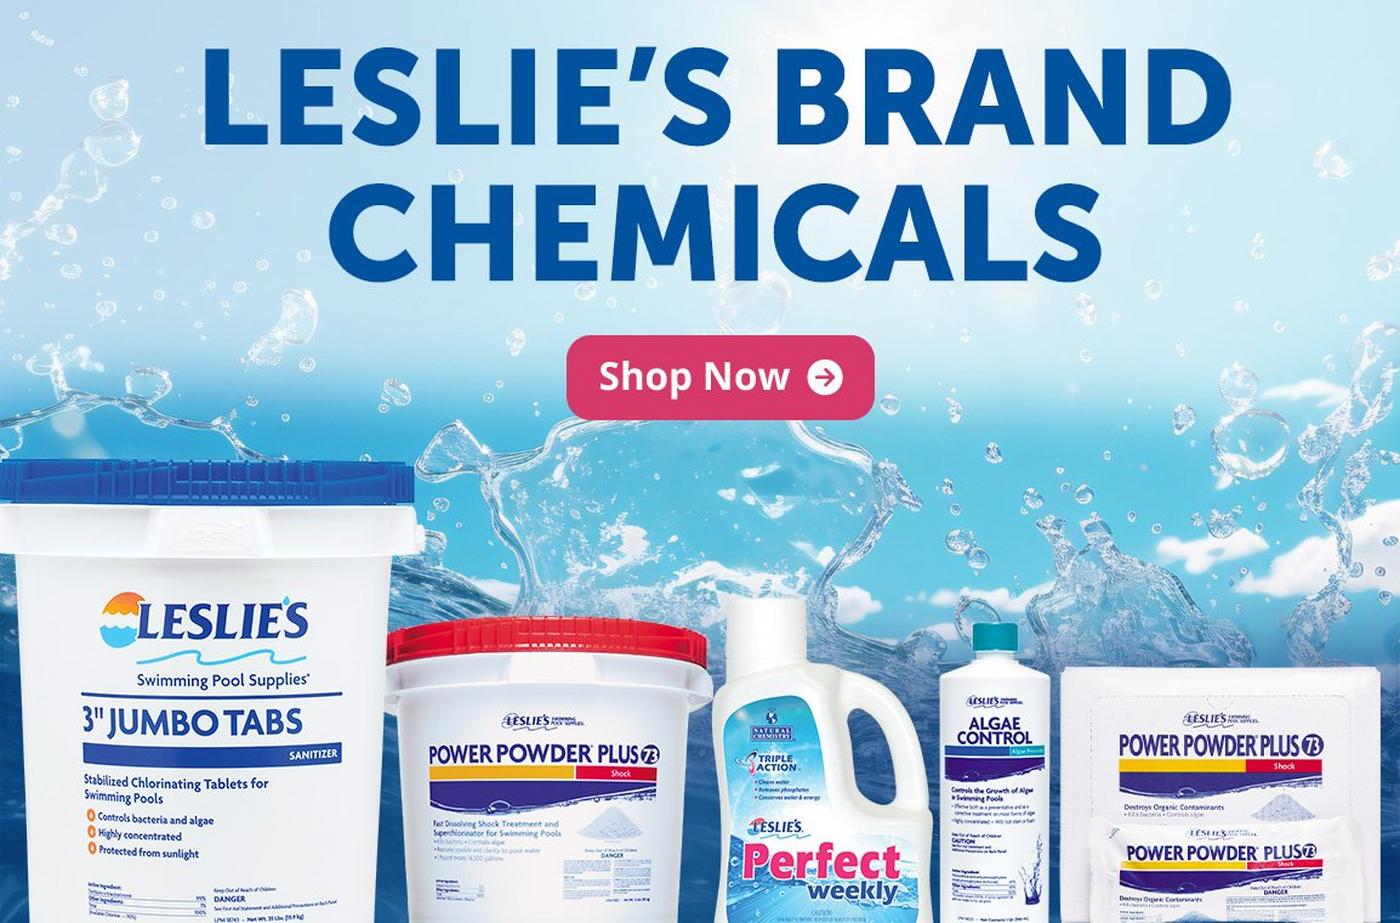 Leslie's Brand Chemicals